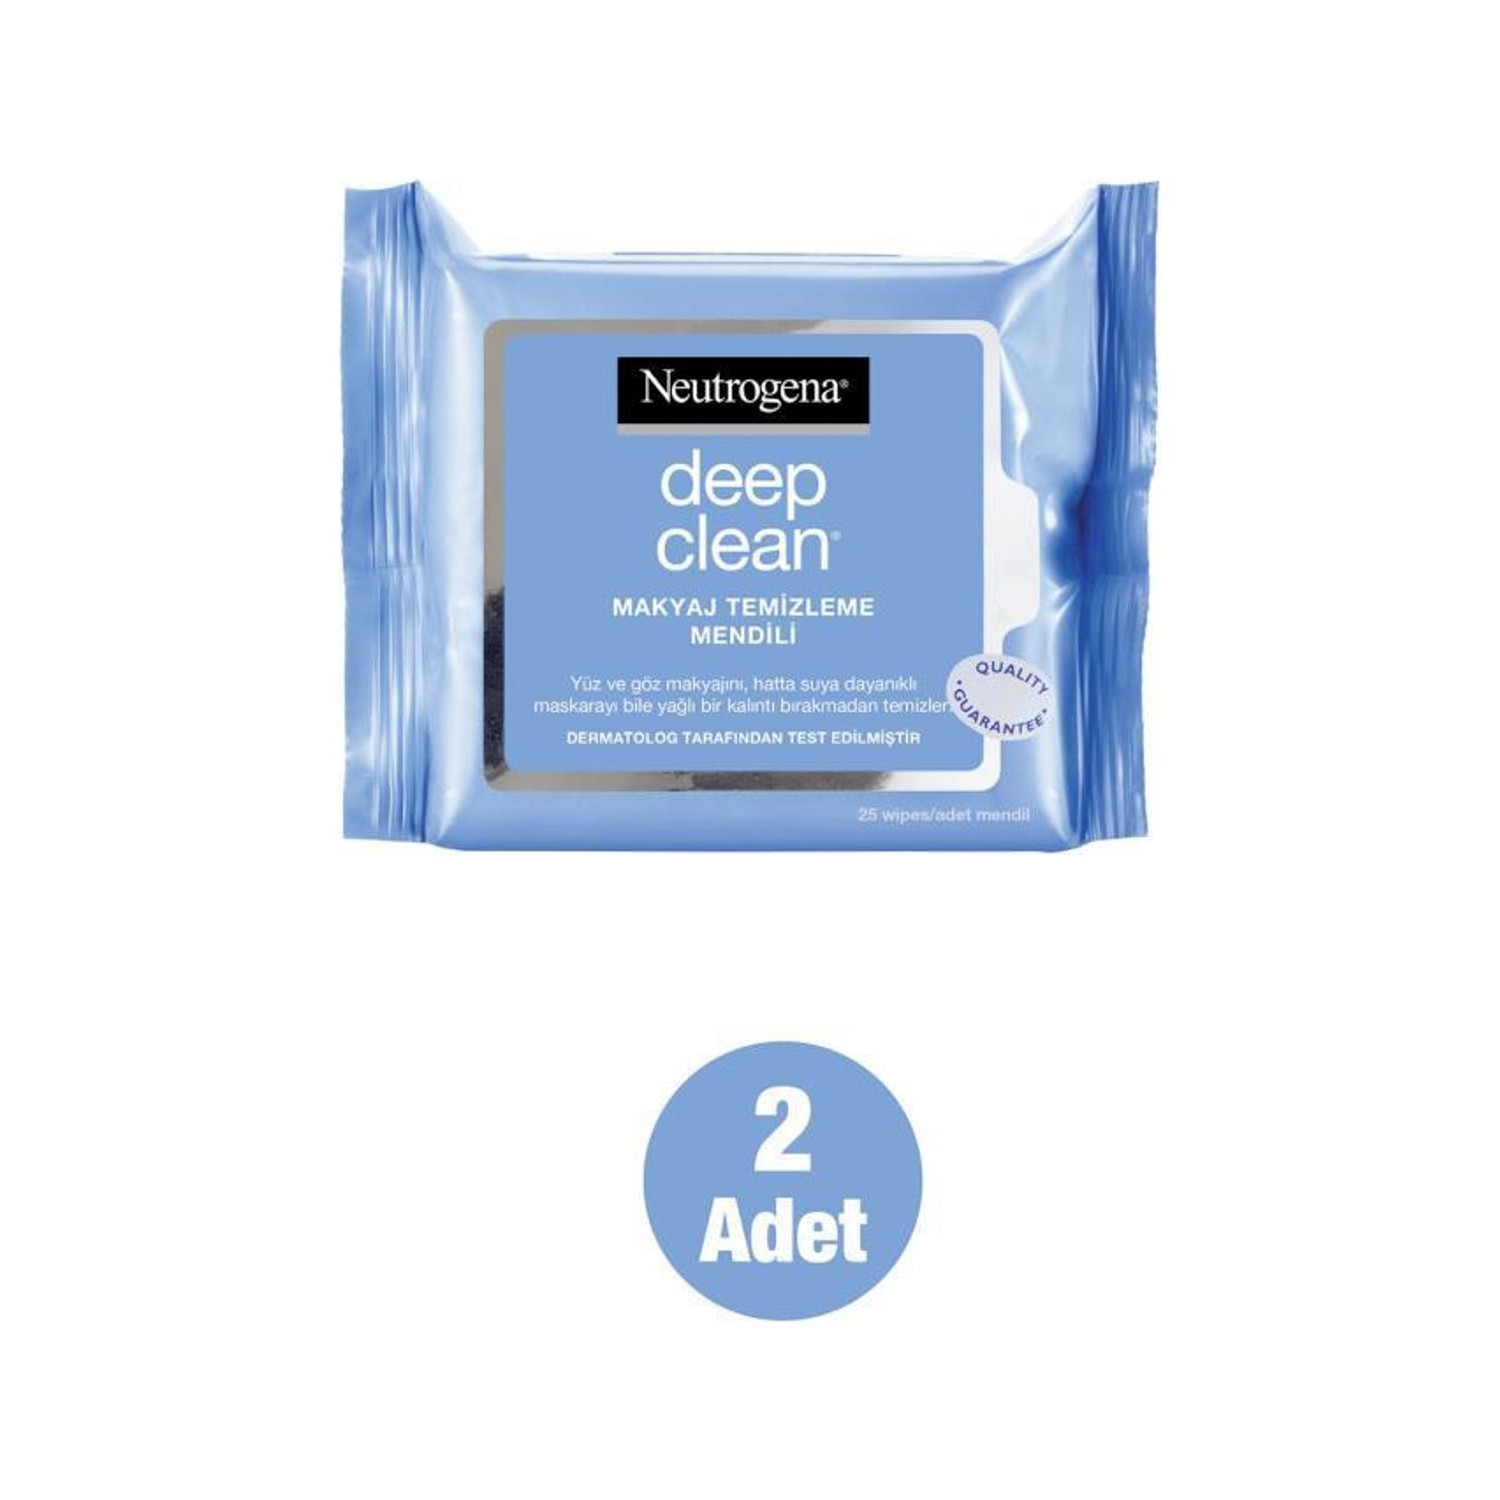 Салфетки для снятия макияжа Neutrogena Deep Clean, 2 упаковки по, 25 салфеток салфетки для снятия макияжа neutrogena deep clean 2 упаковки по 25 салфеток